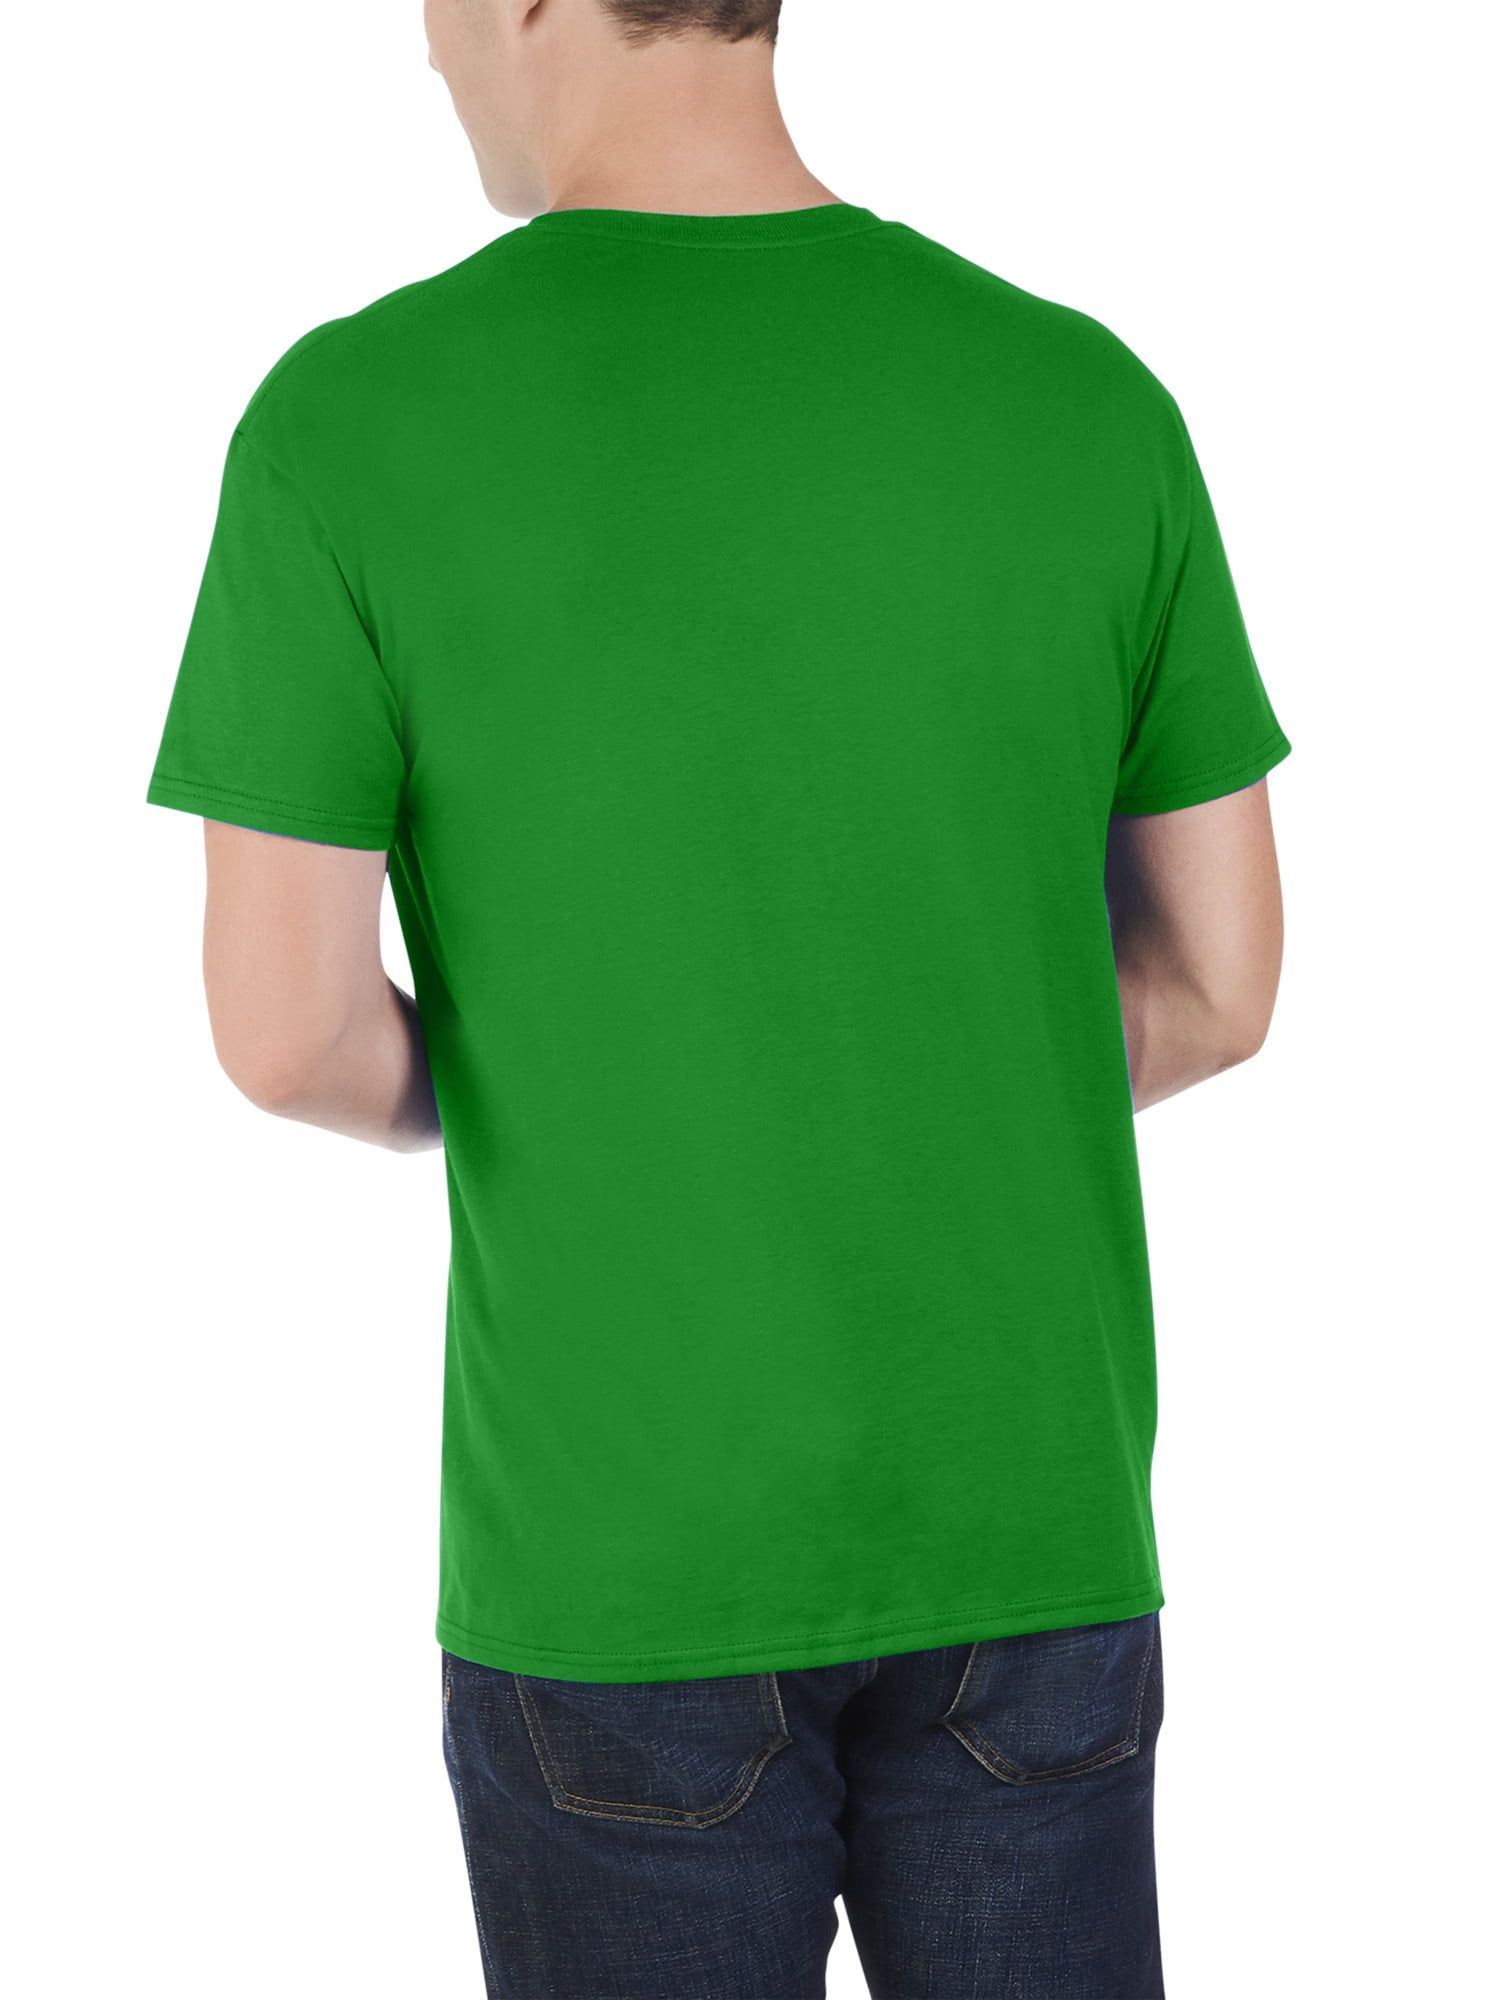 Fruit of the Loom Men's 360 Breathe Crew T Shirt, Sizes S-4XL